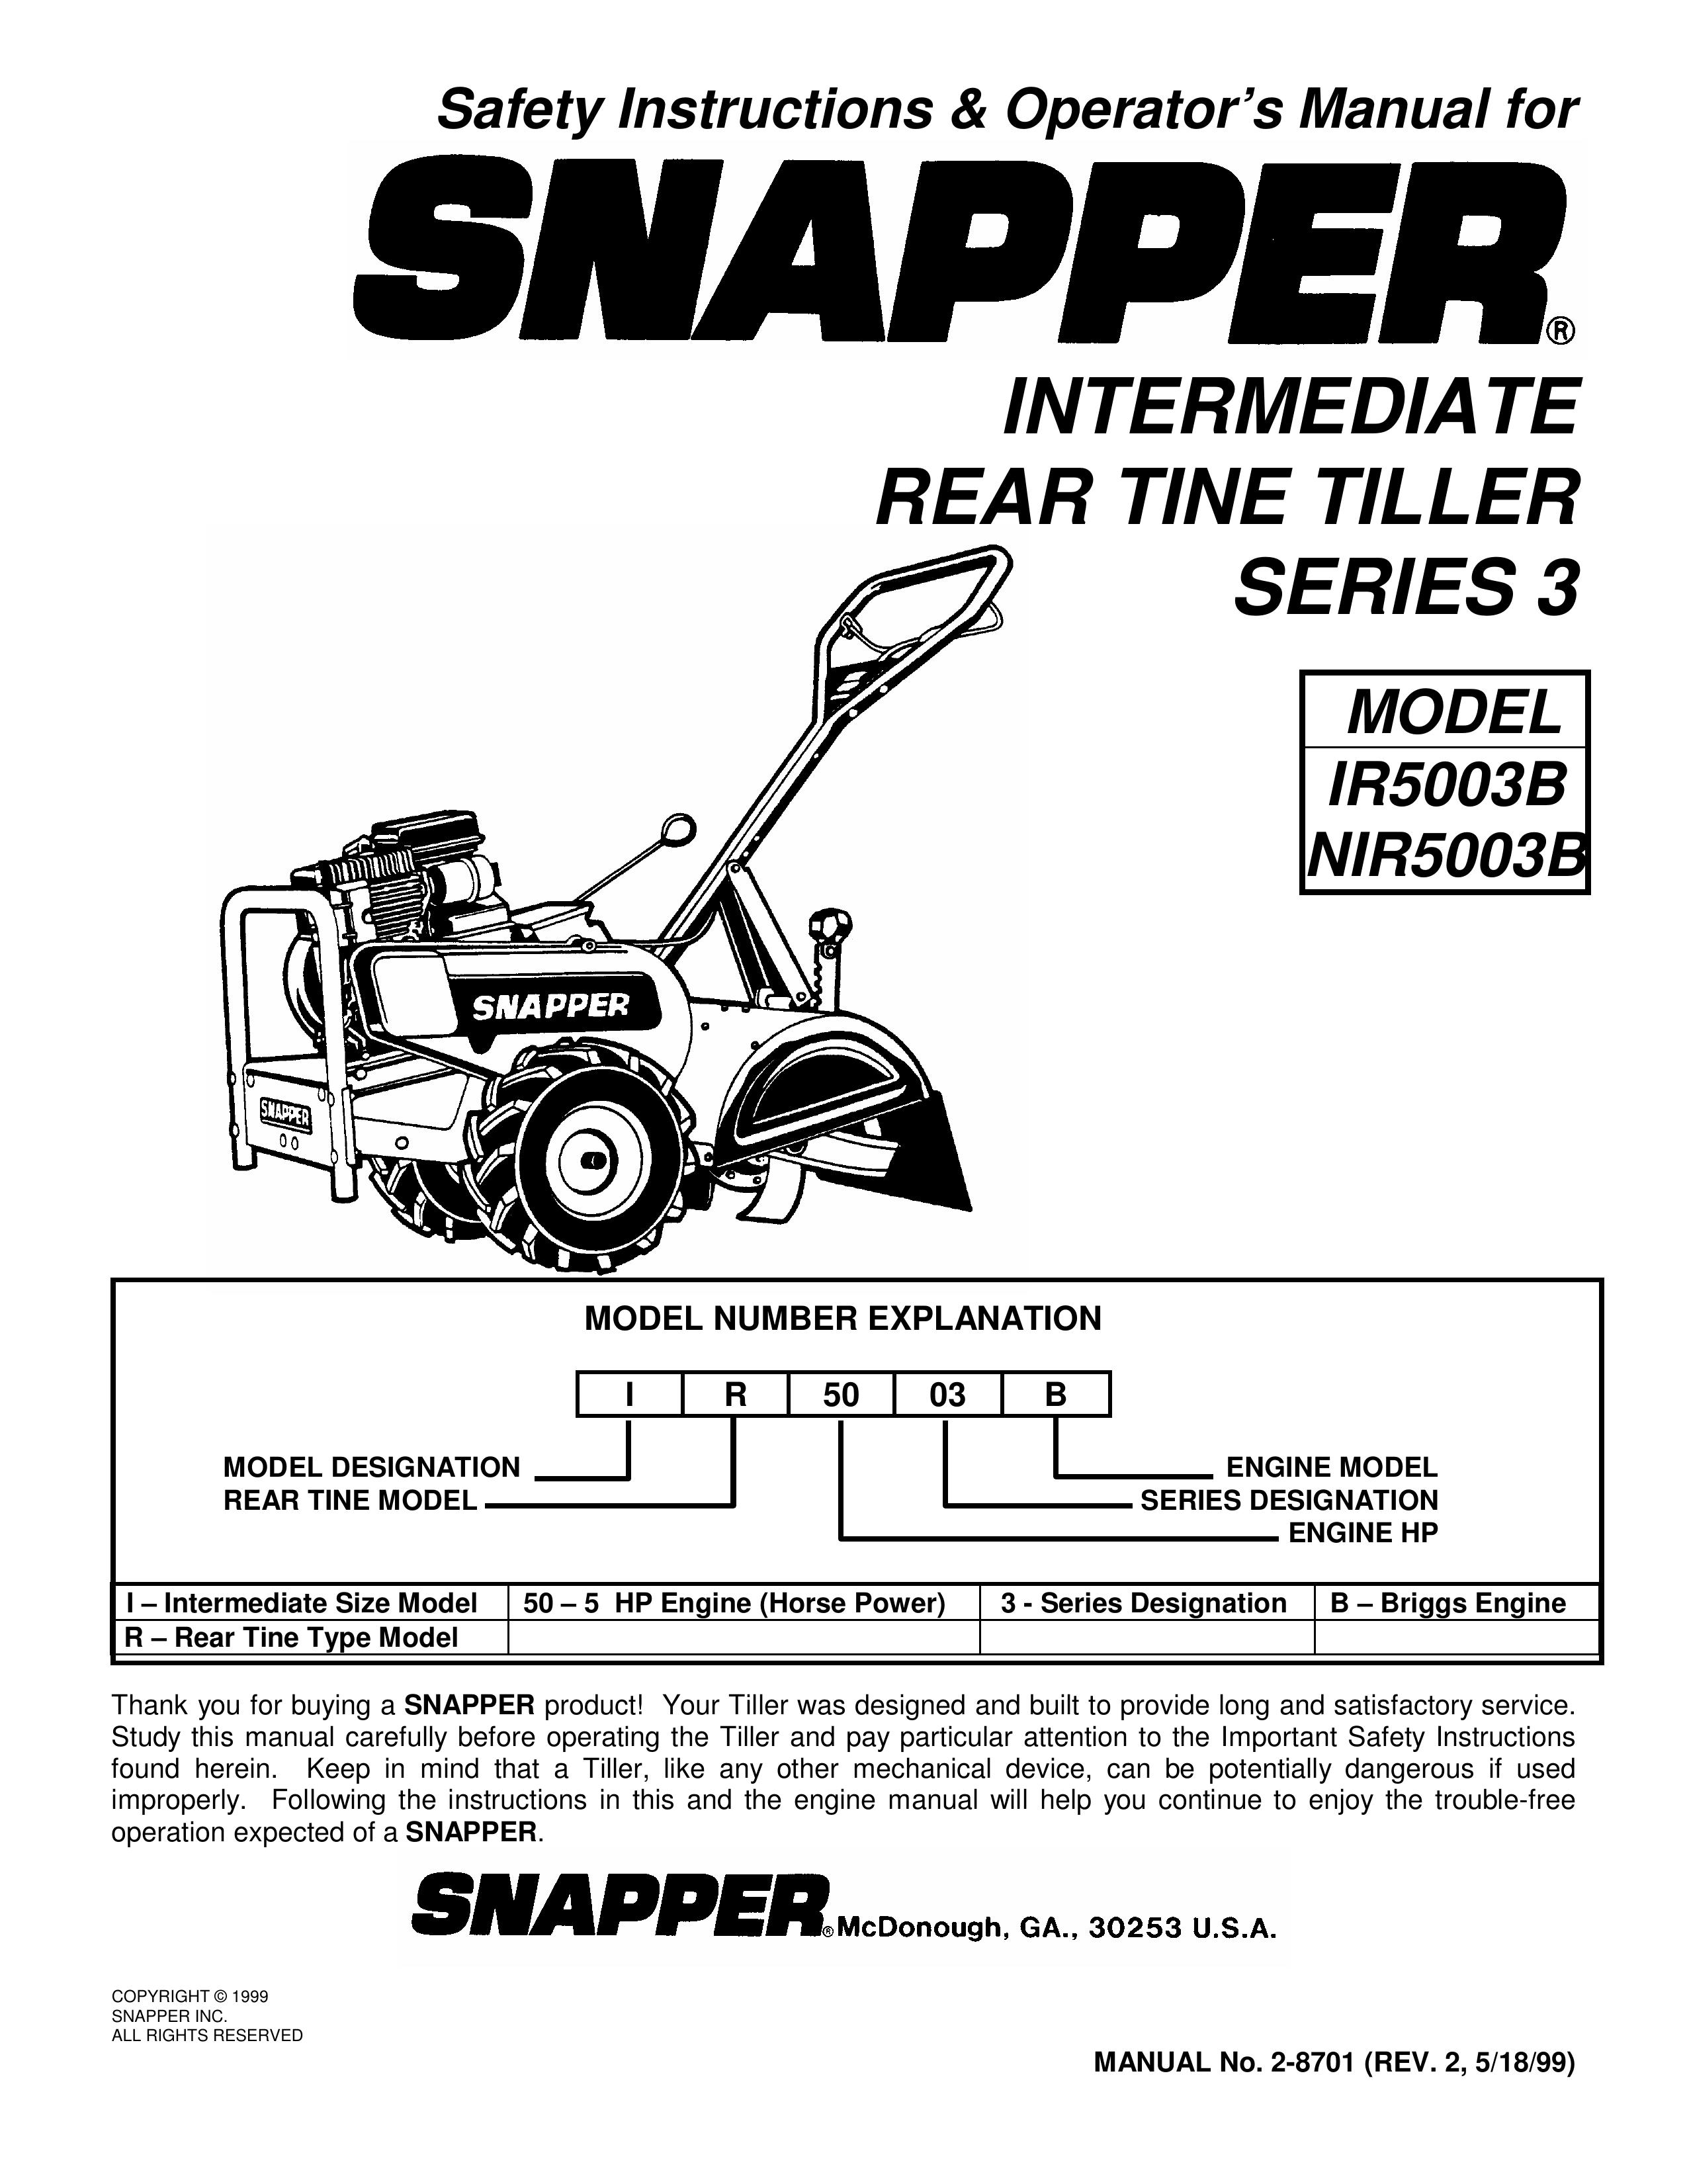 Snapper IR5003B, NIR5003B Tiller User Manual